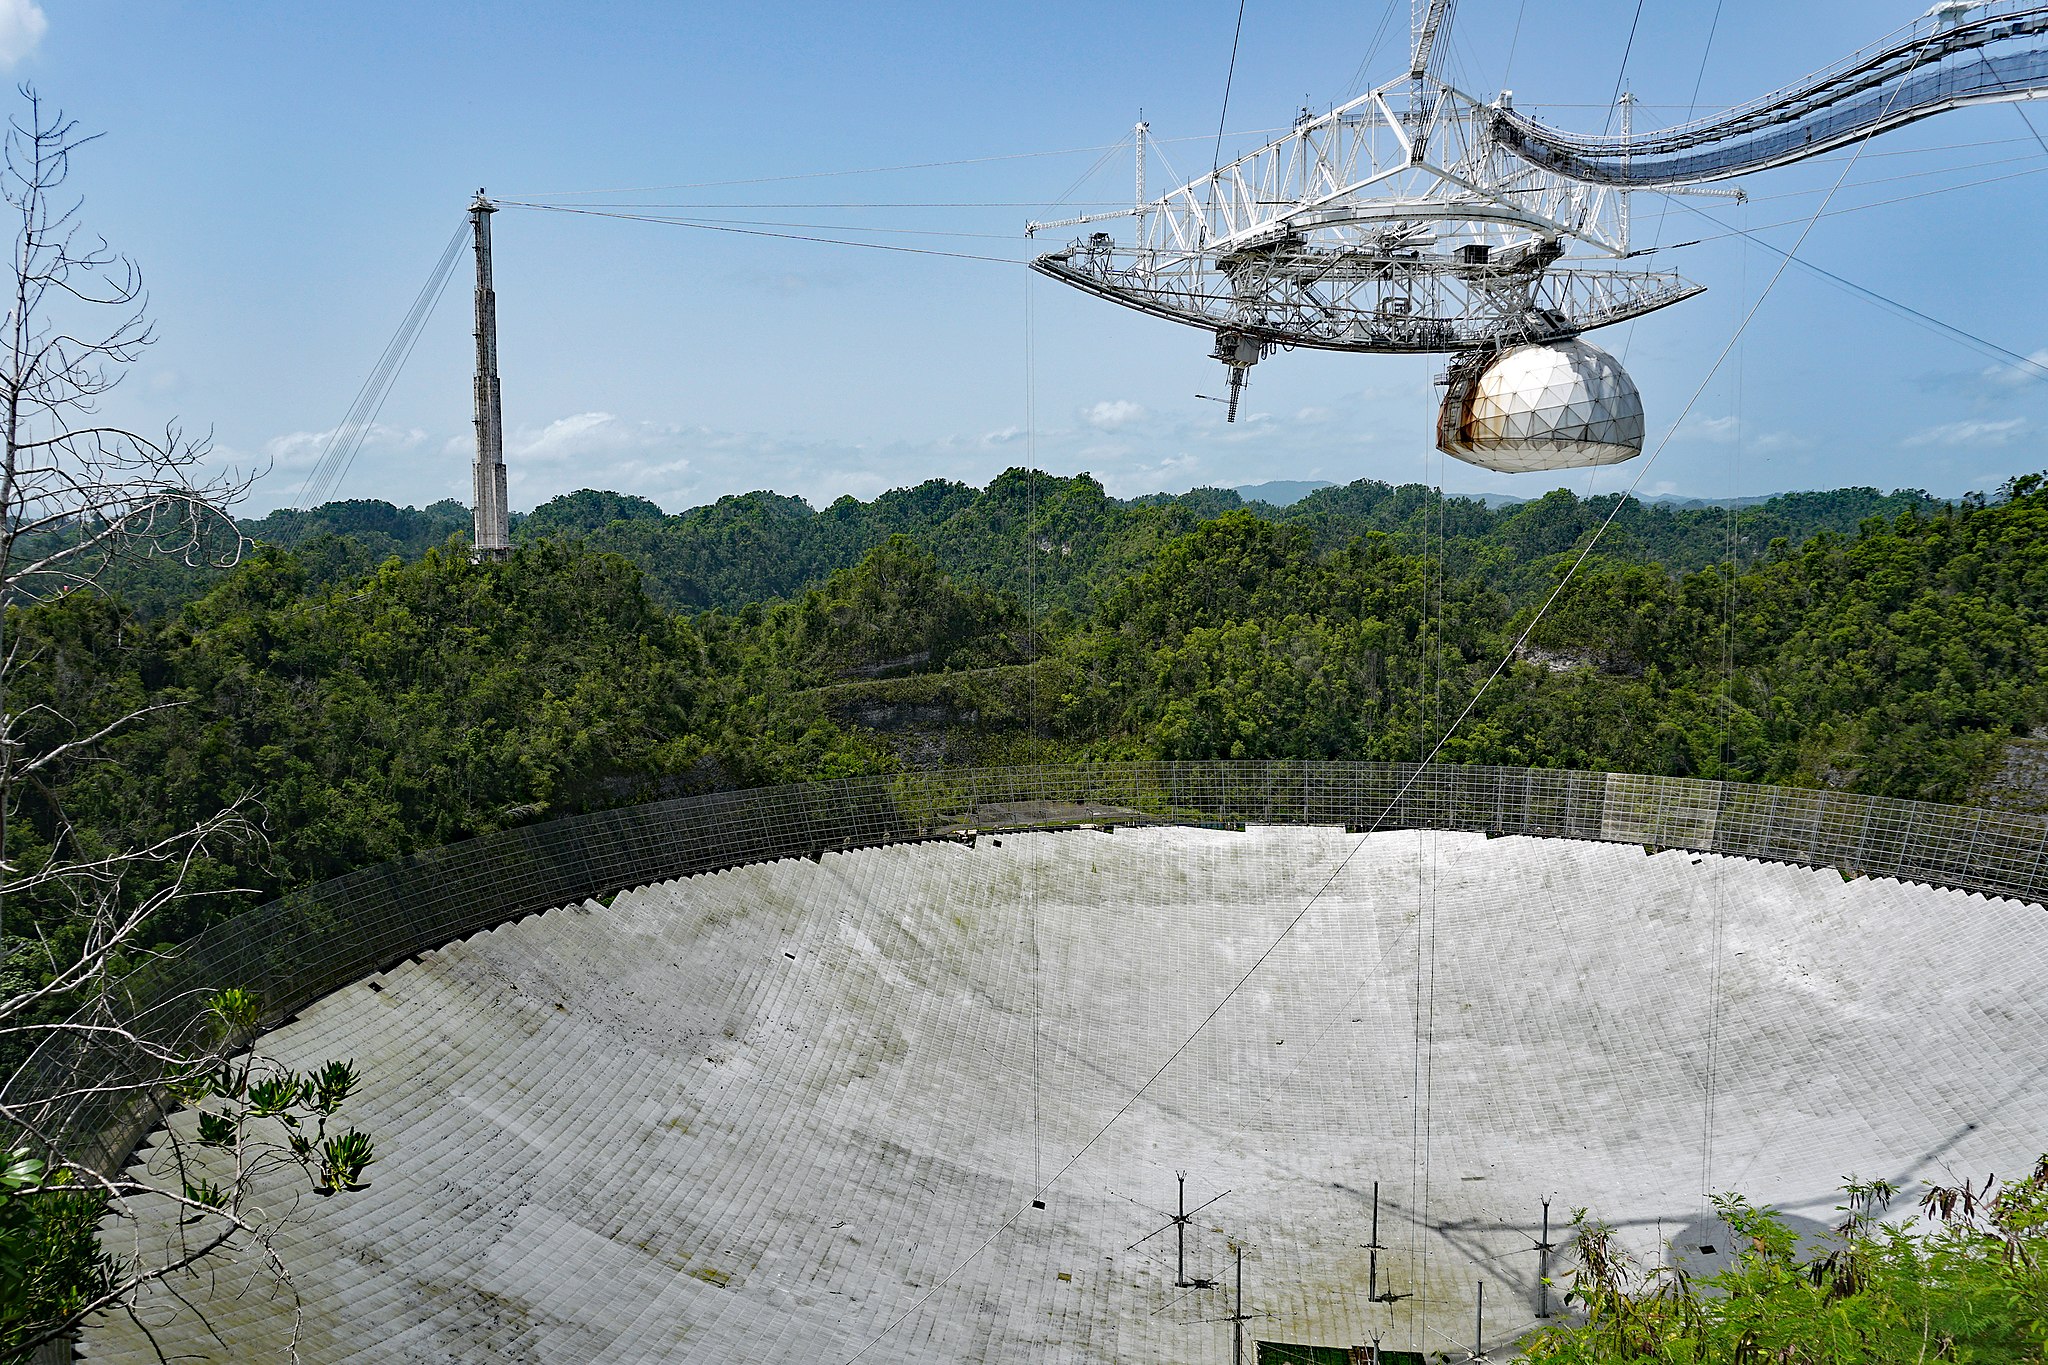 The Arecibo Radiotelescope in Puerto Rico, before its destruction